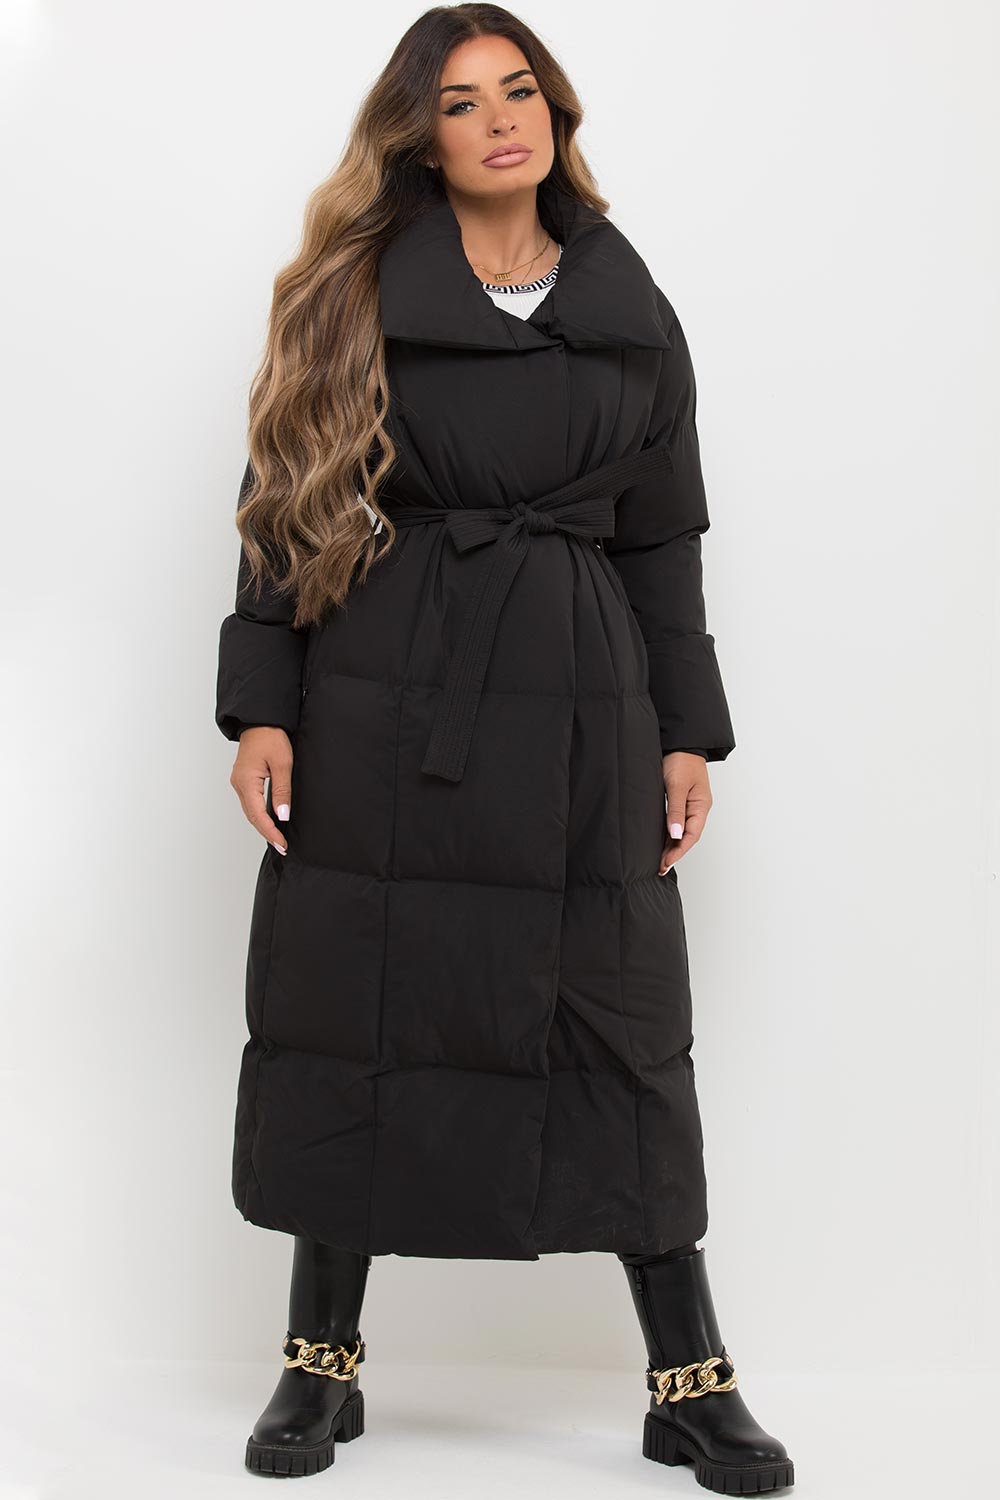 womens long black duvet coat uk